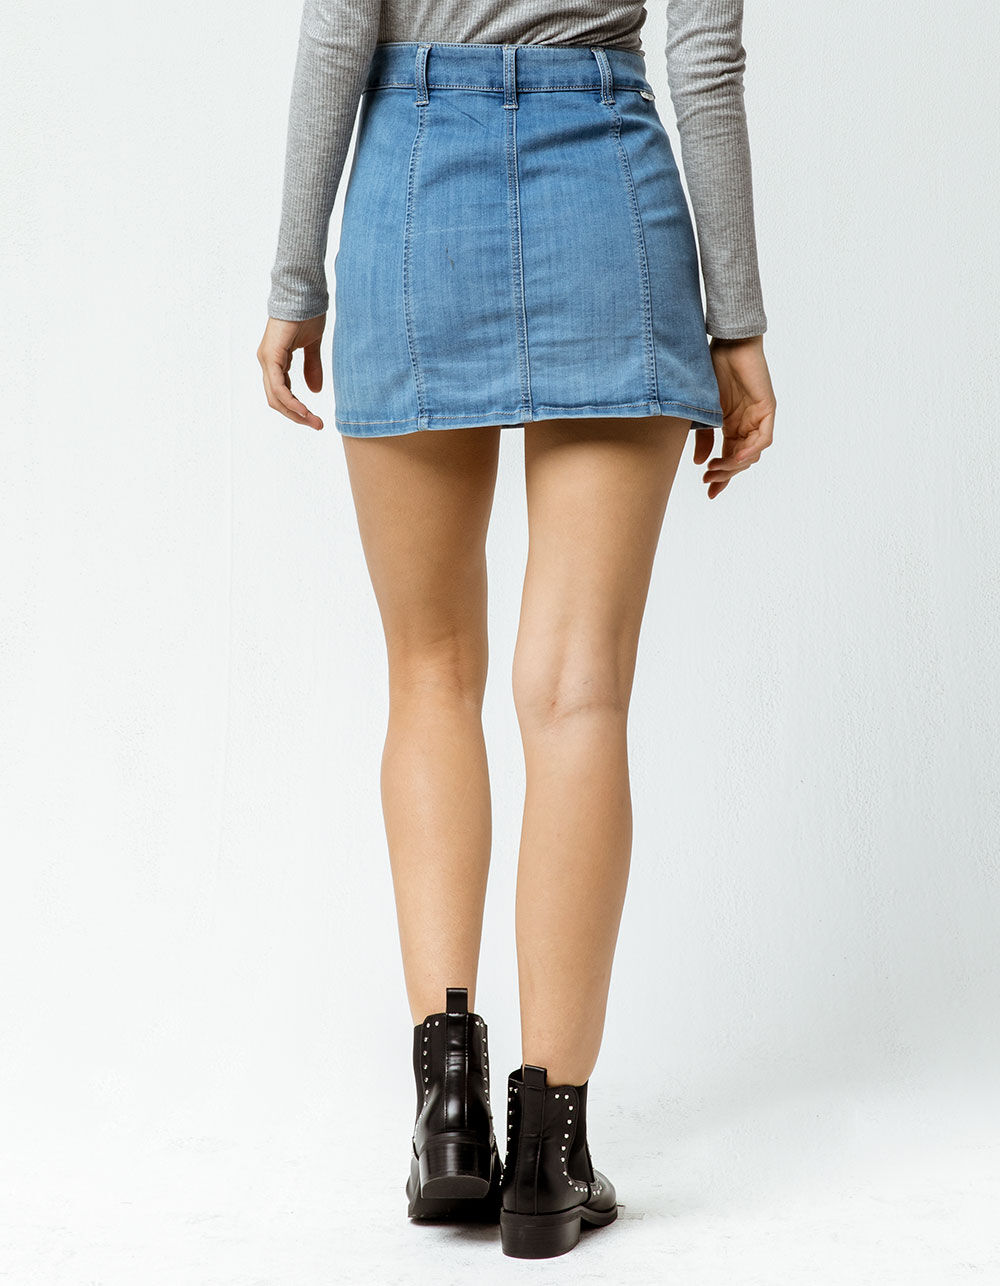 SKY AND SPARROW Button Front Denim Mini Skirt - LIGHT BLAST | Tillys